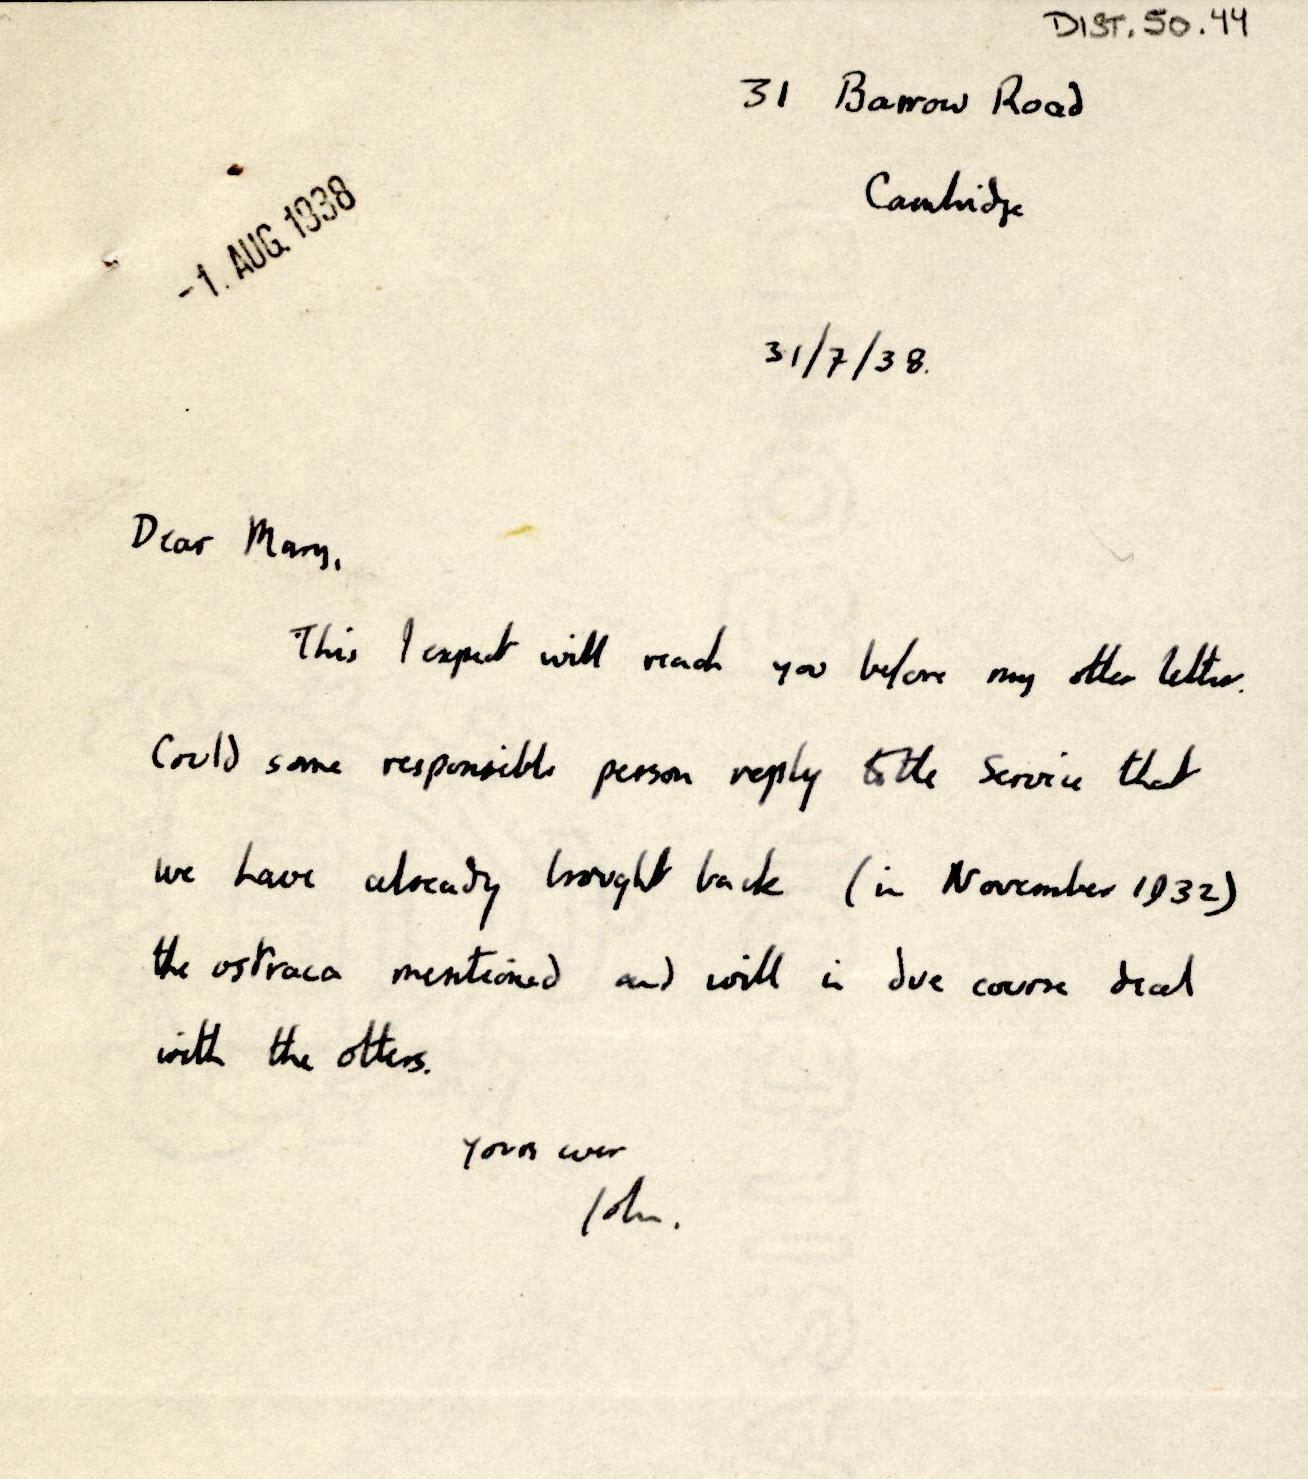 1926-39 correspondence with Antiquities Service DIST.50.44